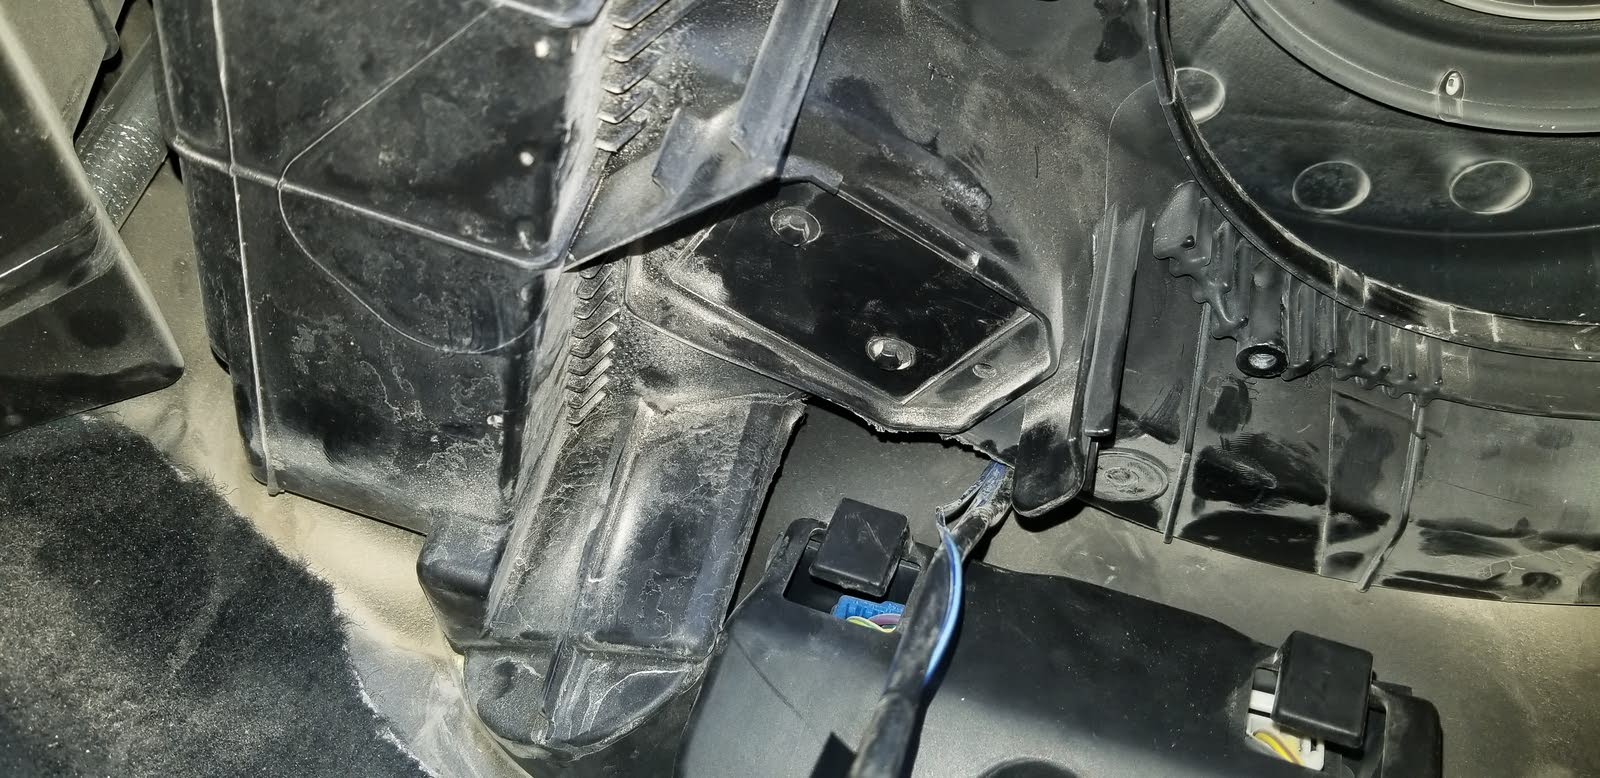 Dodge Ram Heater Control Problems - Ultimate Dodge 2017 Ram 3500 Heater Not Working